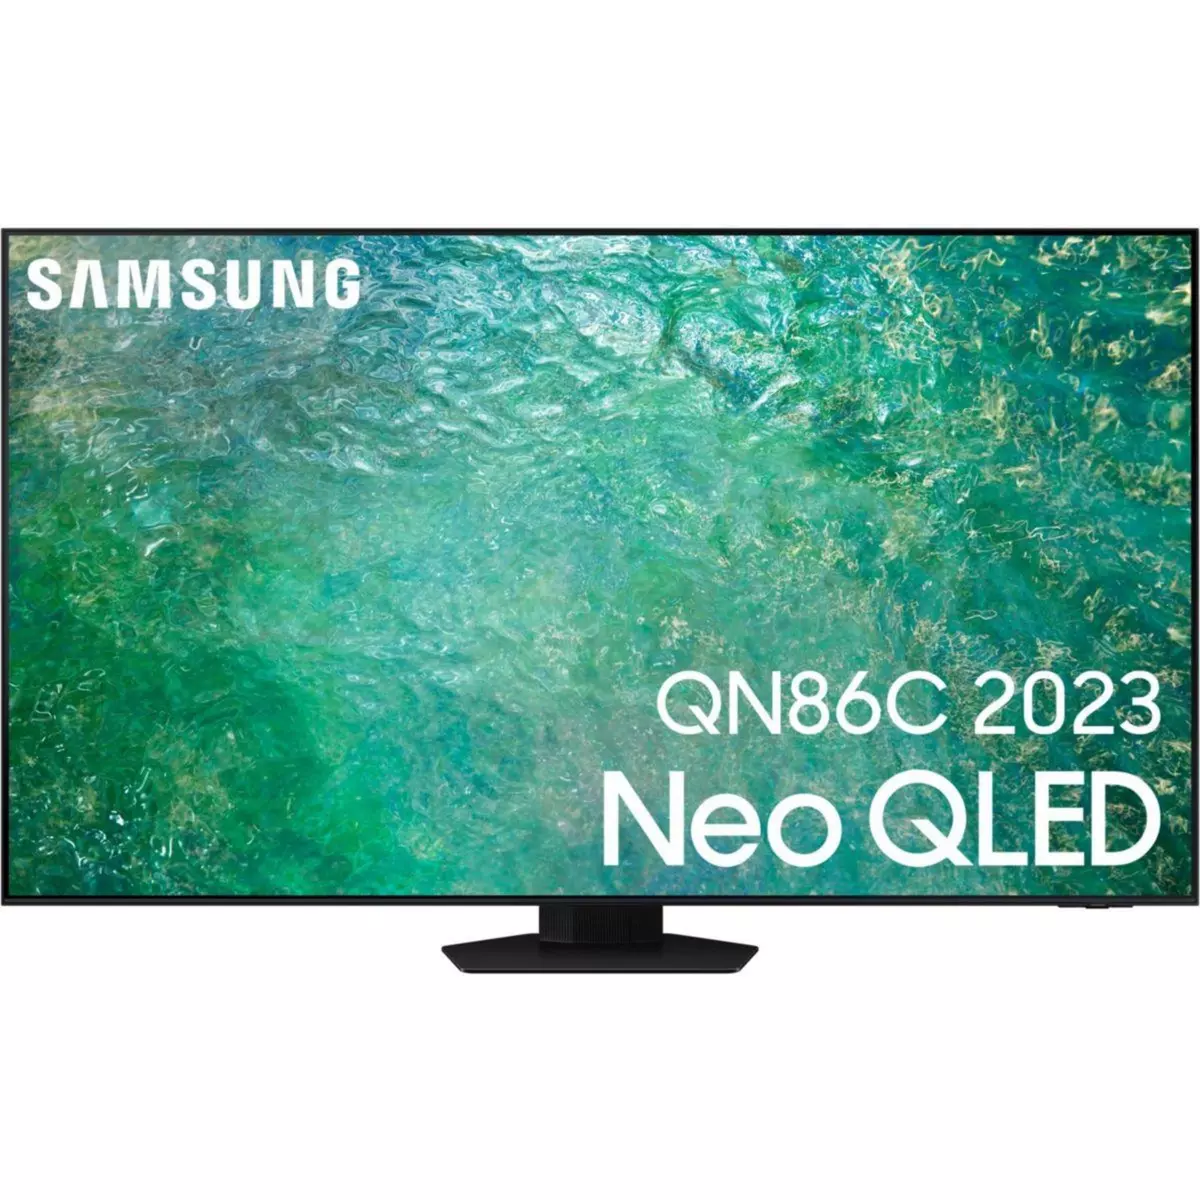 Samsung TV QLED NeoQLED TQ55QN86C